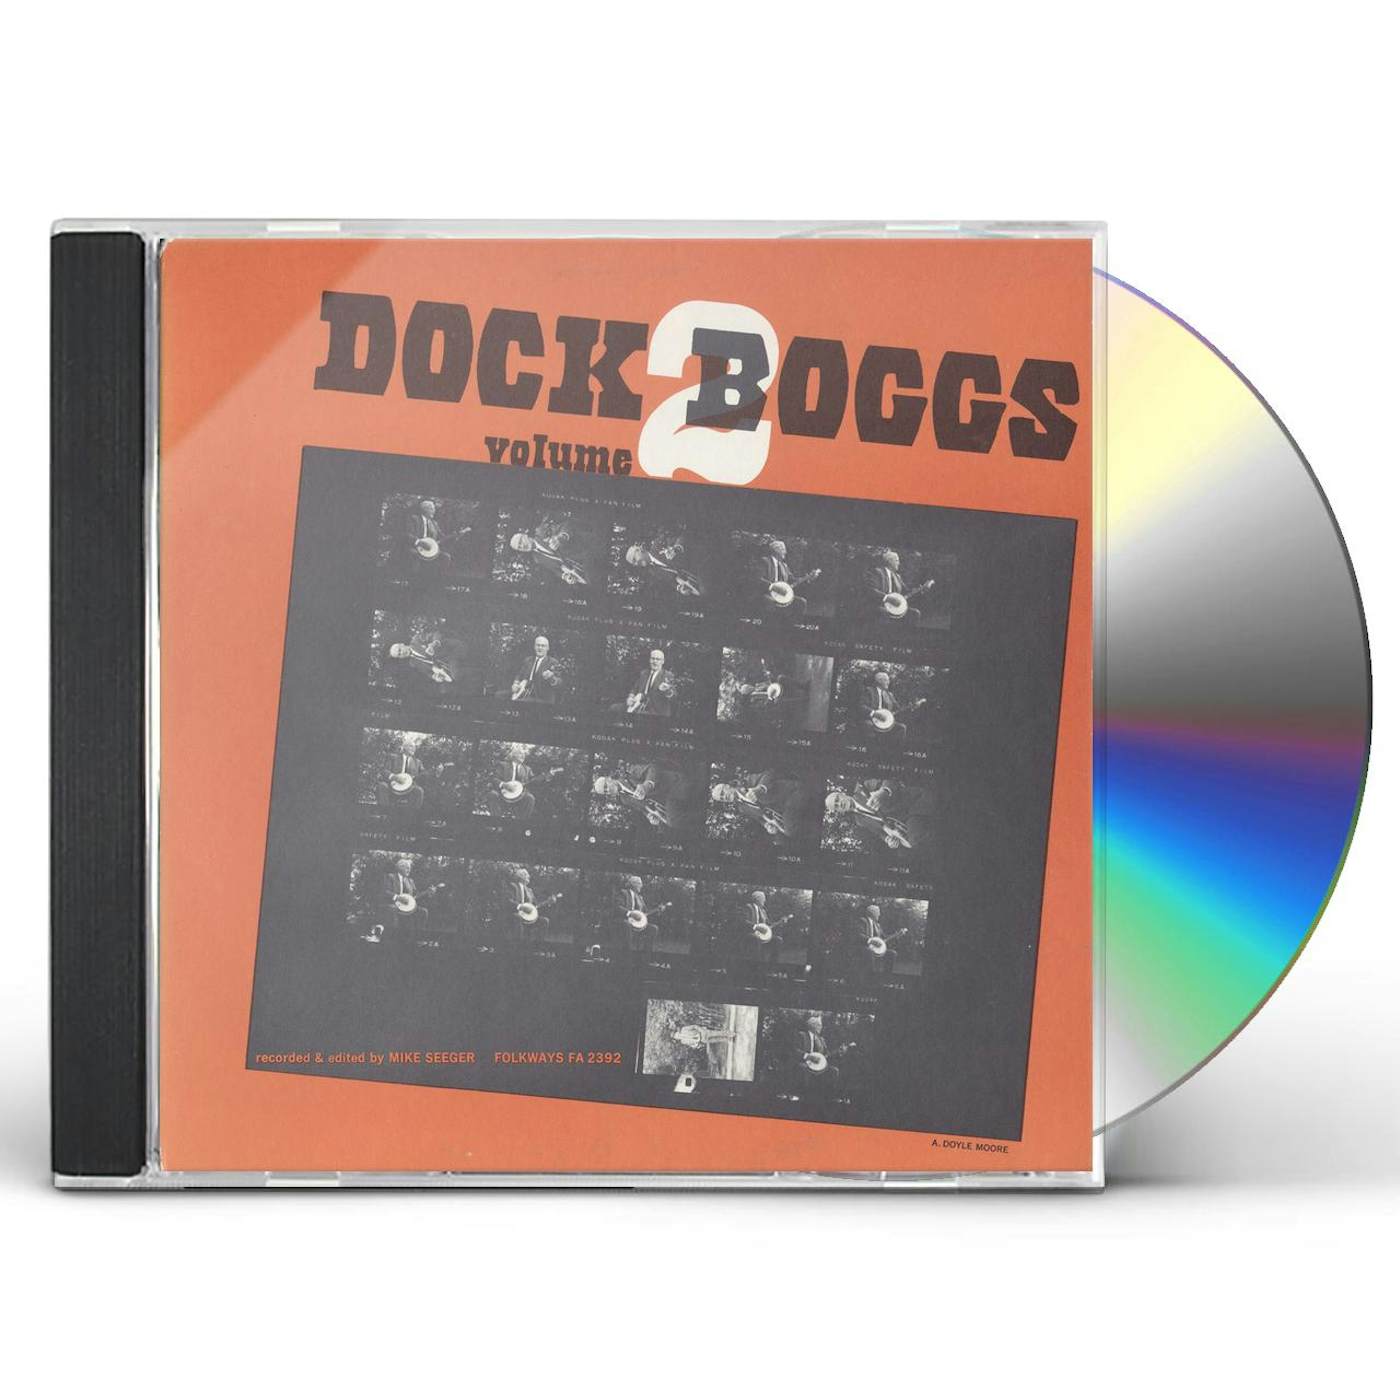 DOCK BOGGS VOL. 2 CD